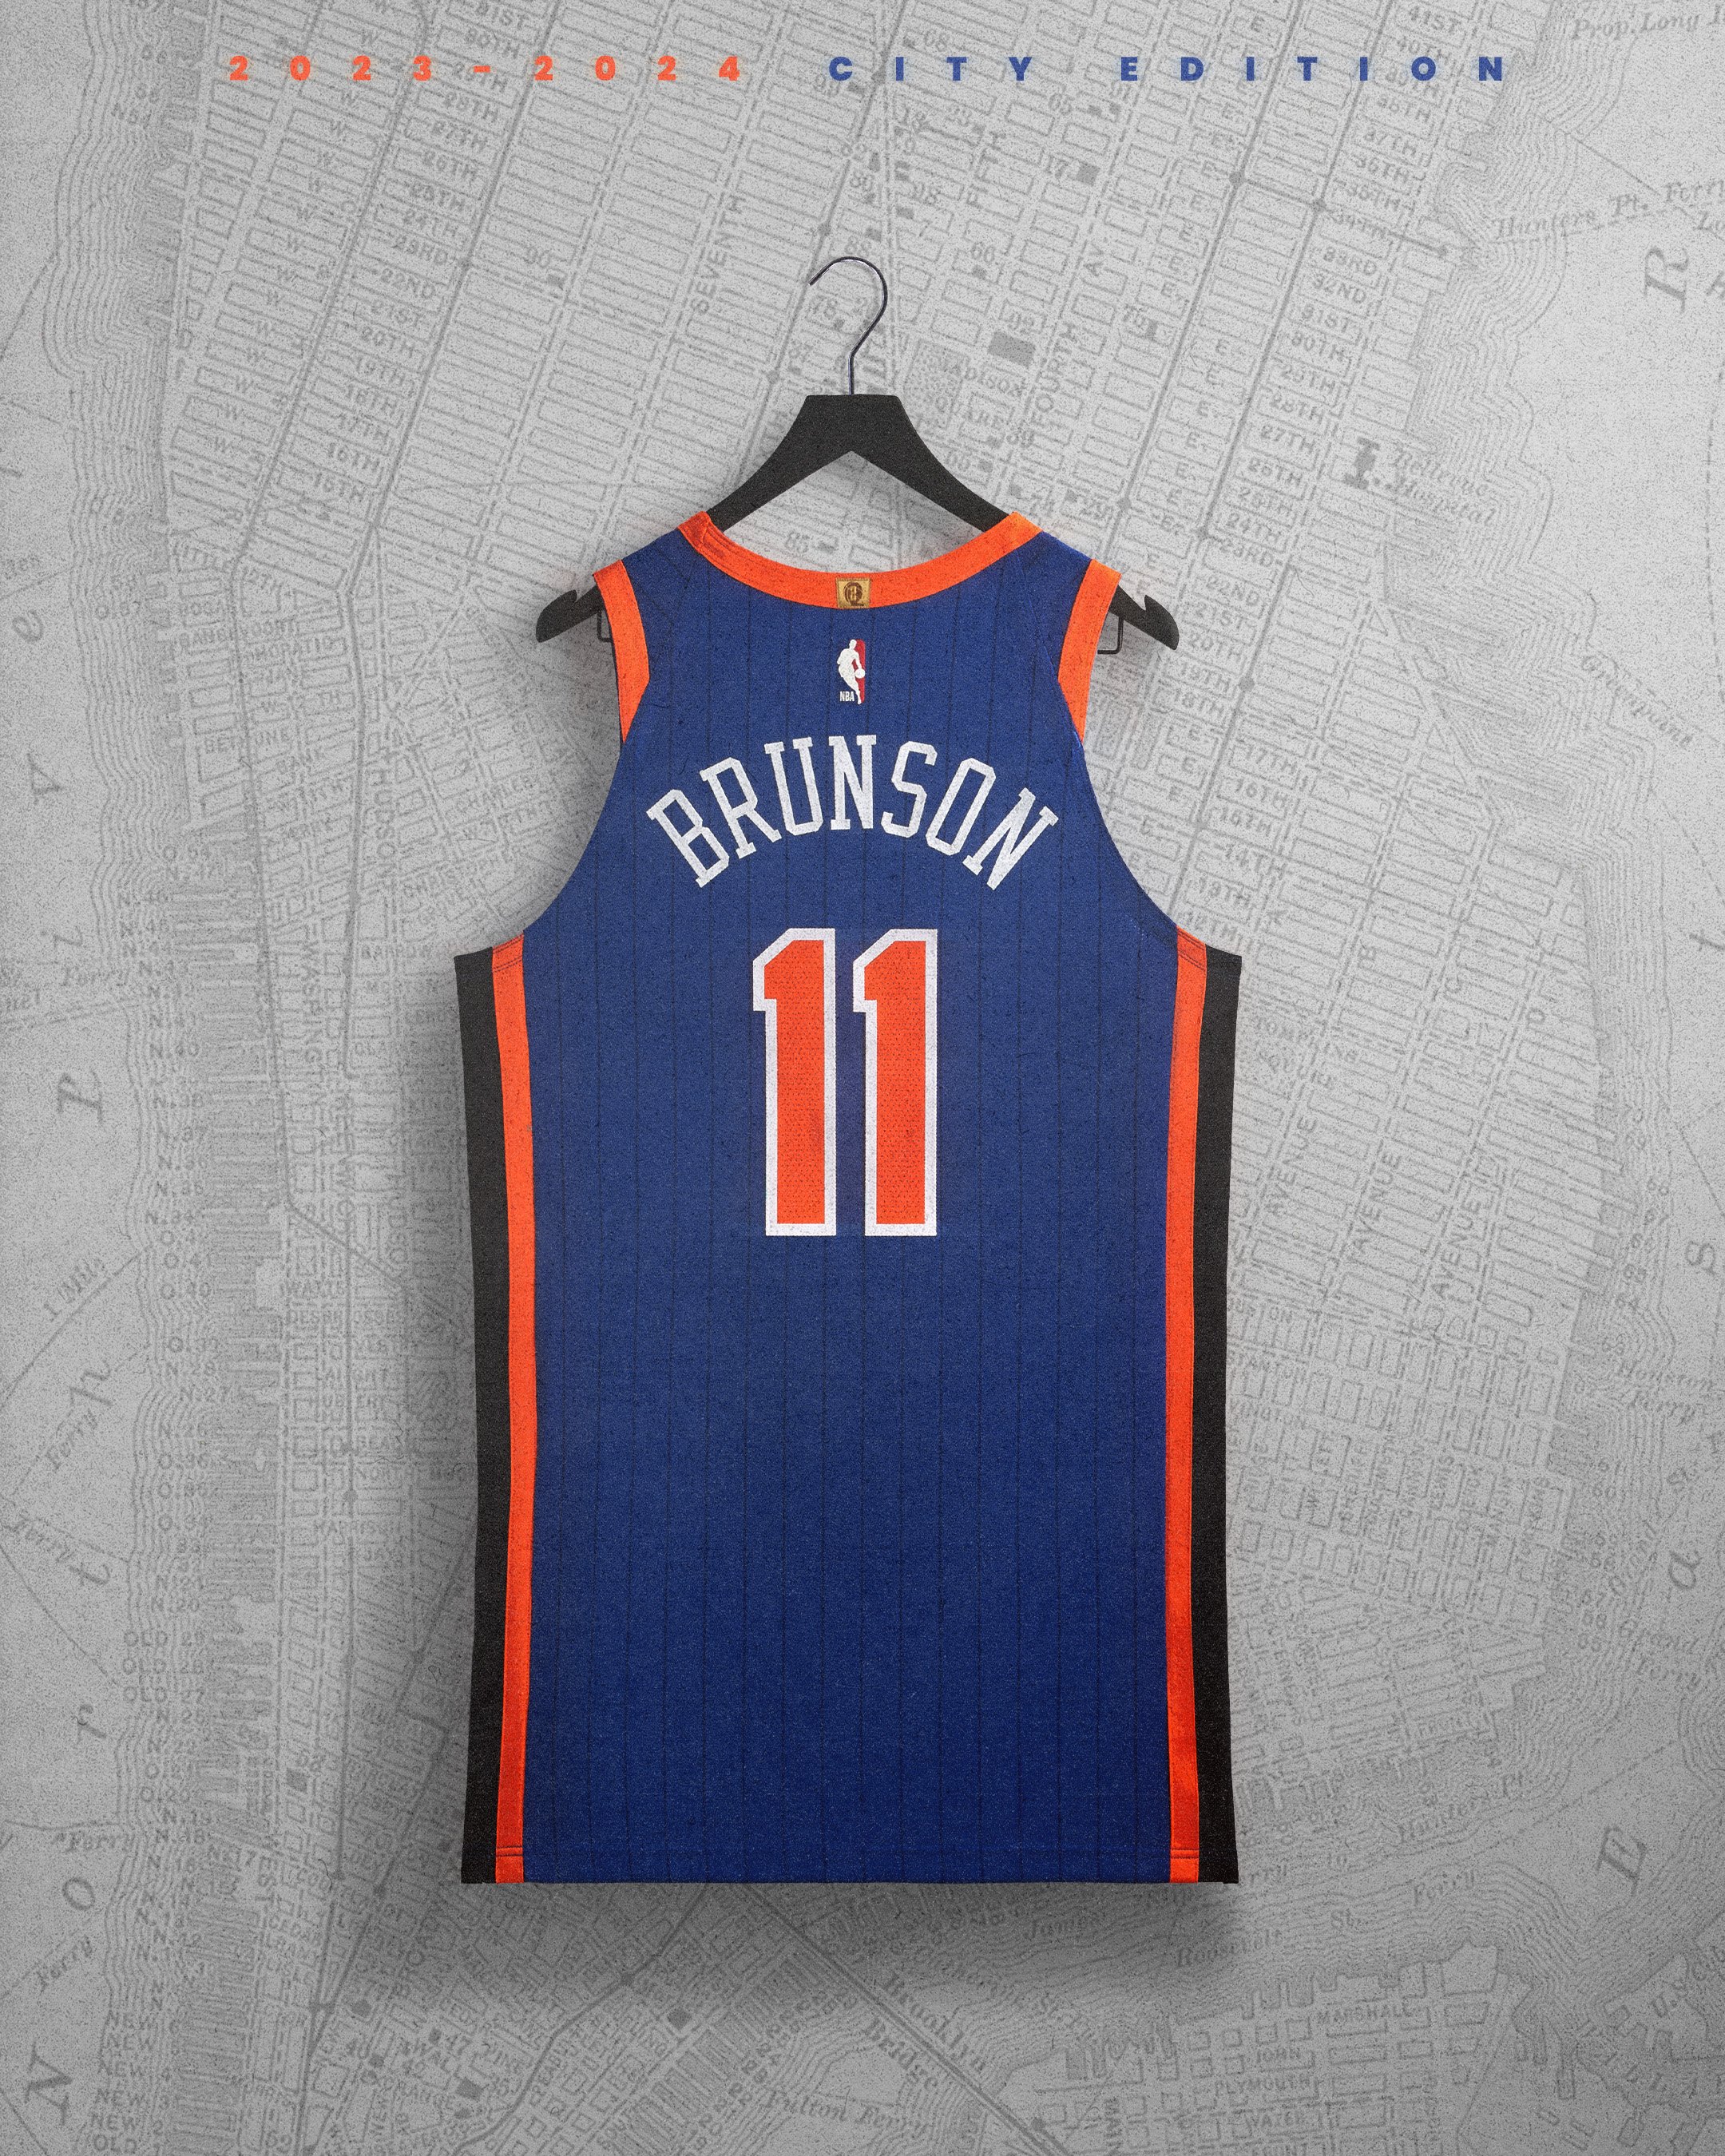 Kith Designs New York Knicks City Edition Jerseys